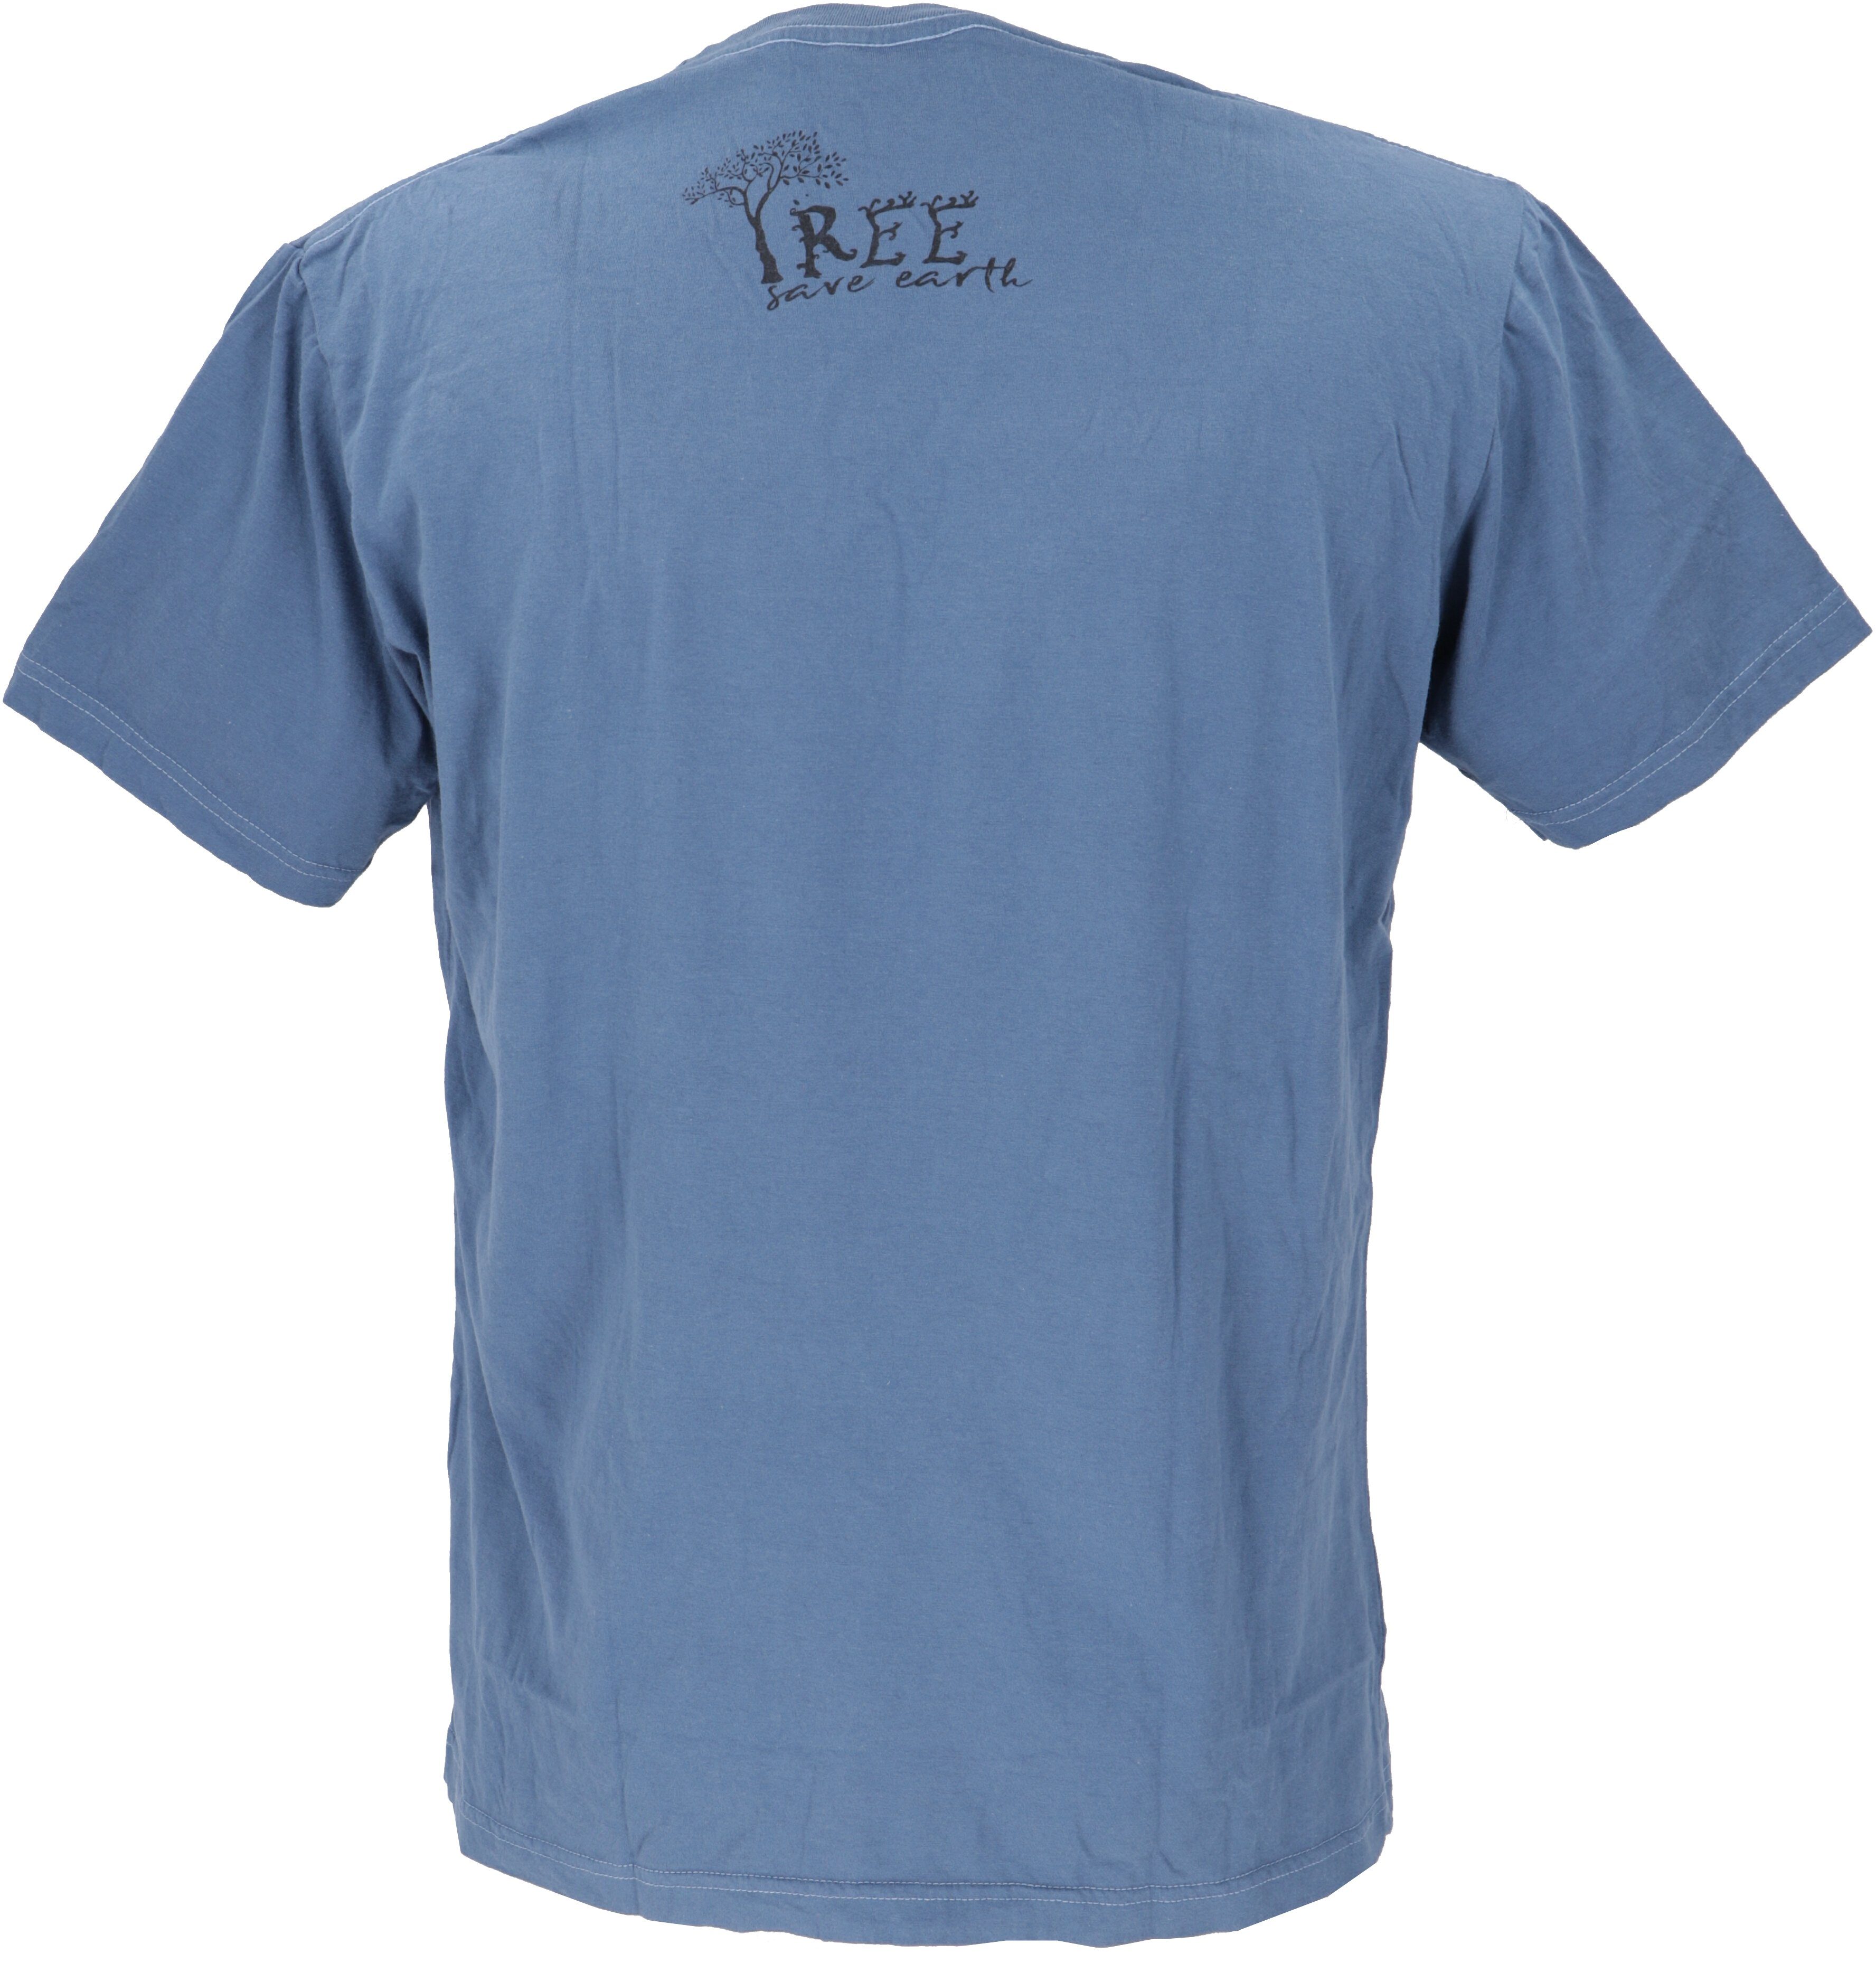 Tree Retro Guru-Shop T-Shirt save T-Shirt, Go Go.. Retro green/blau - earth T-Shirt